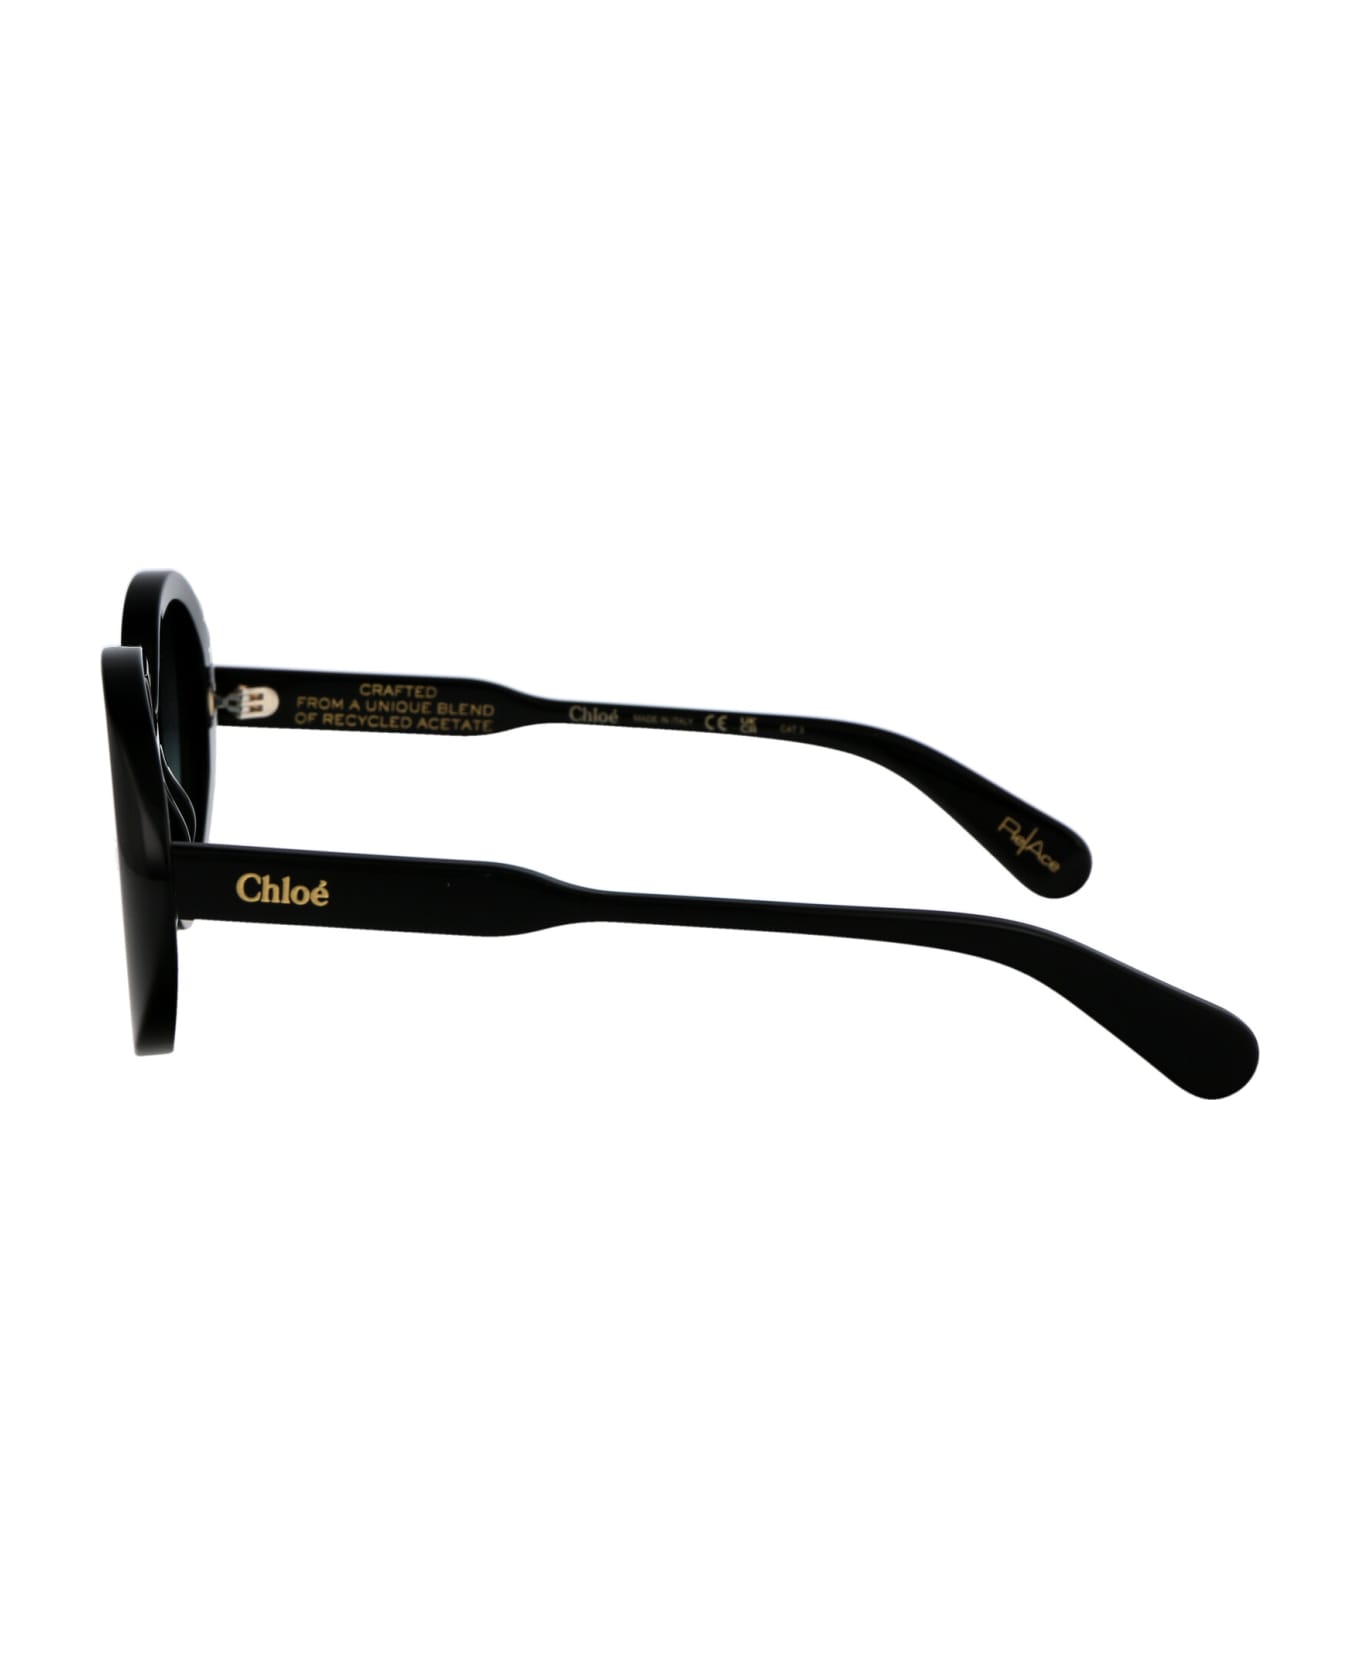 Chloé Eyewear Ch0221s Sunglasses - 001 BLACK BLACK GREY